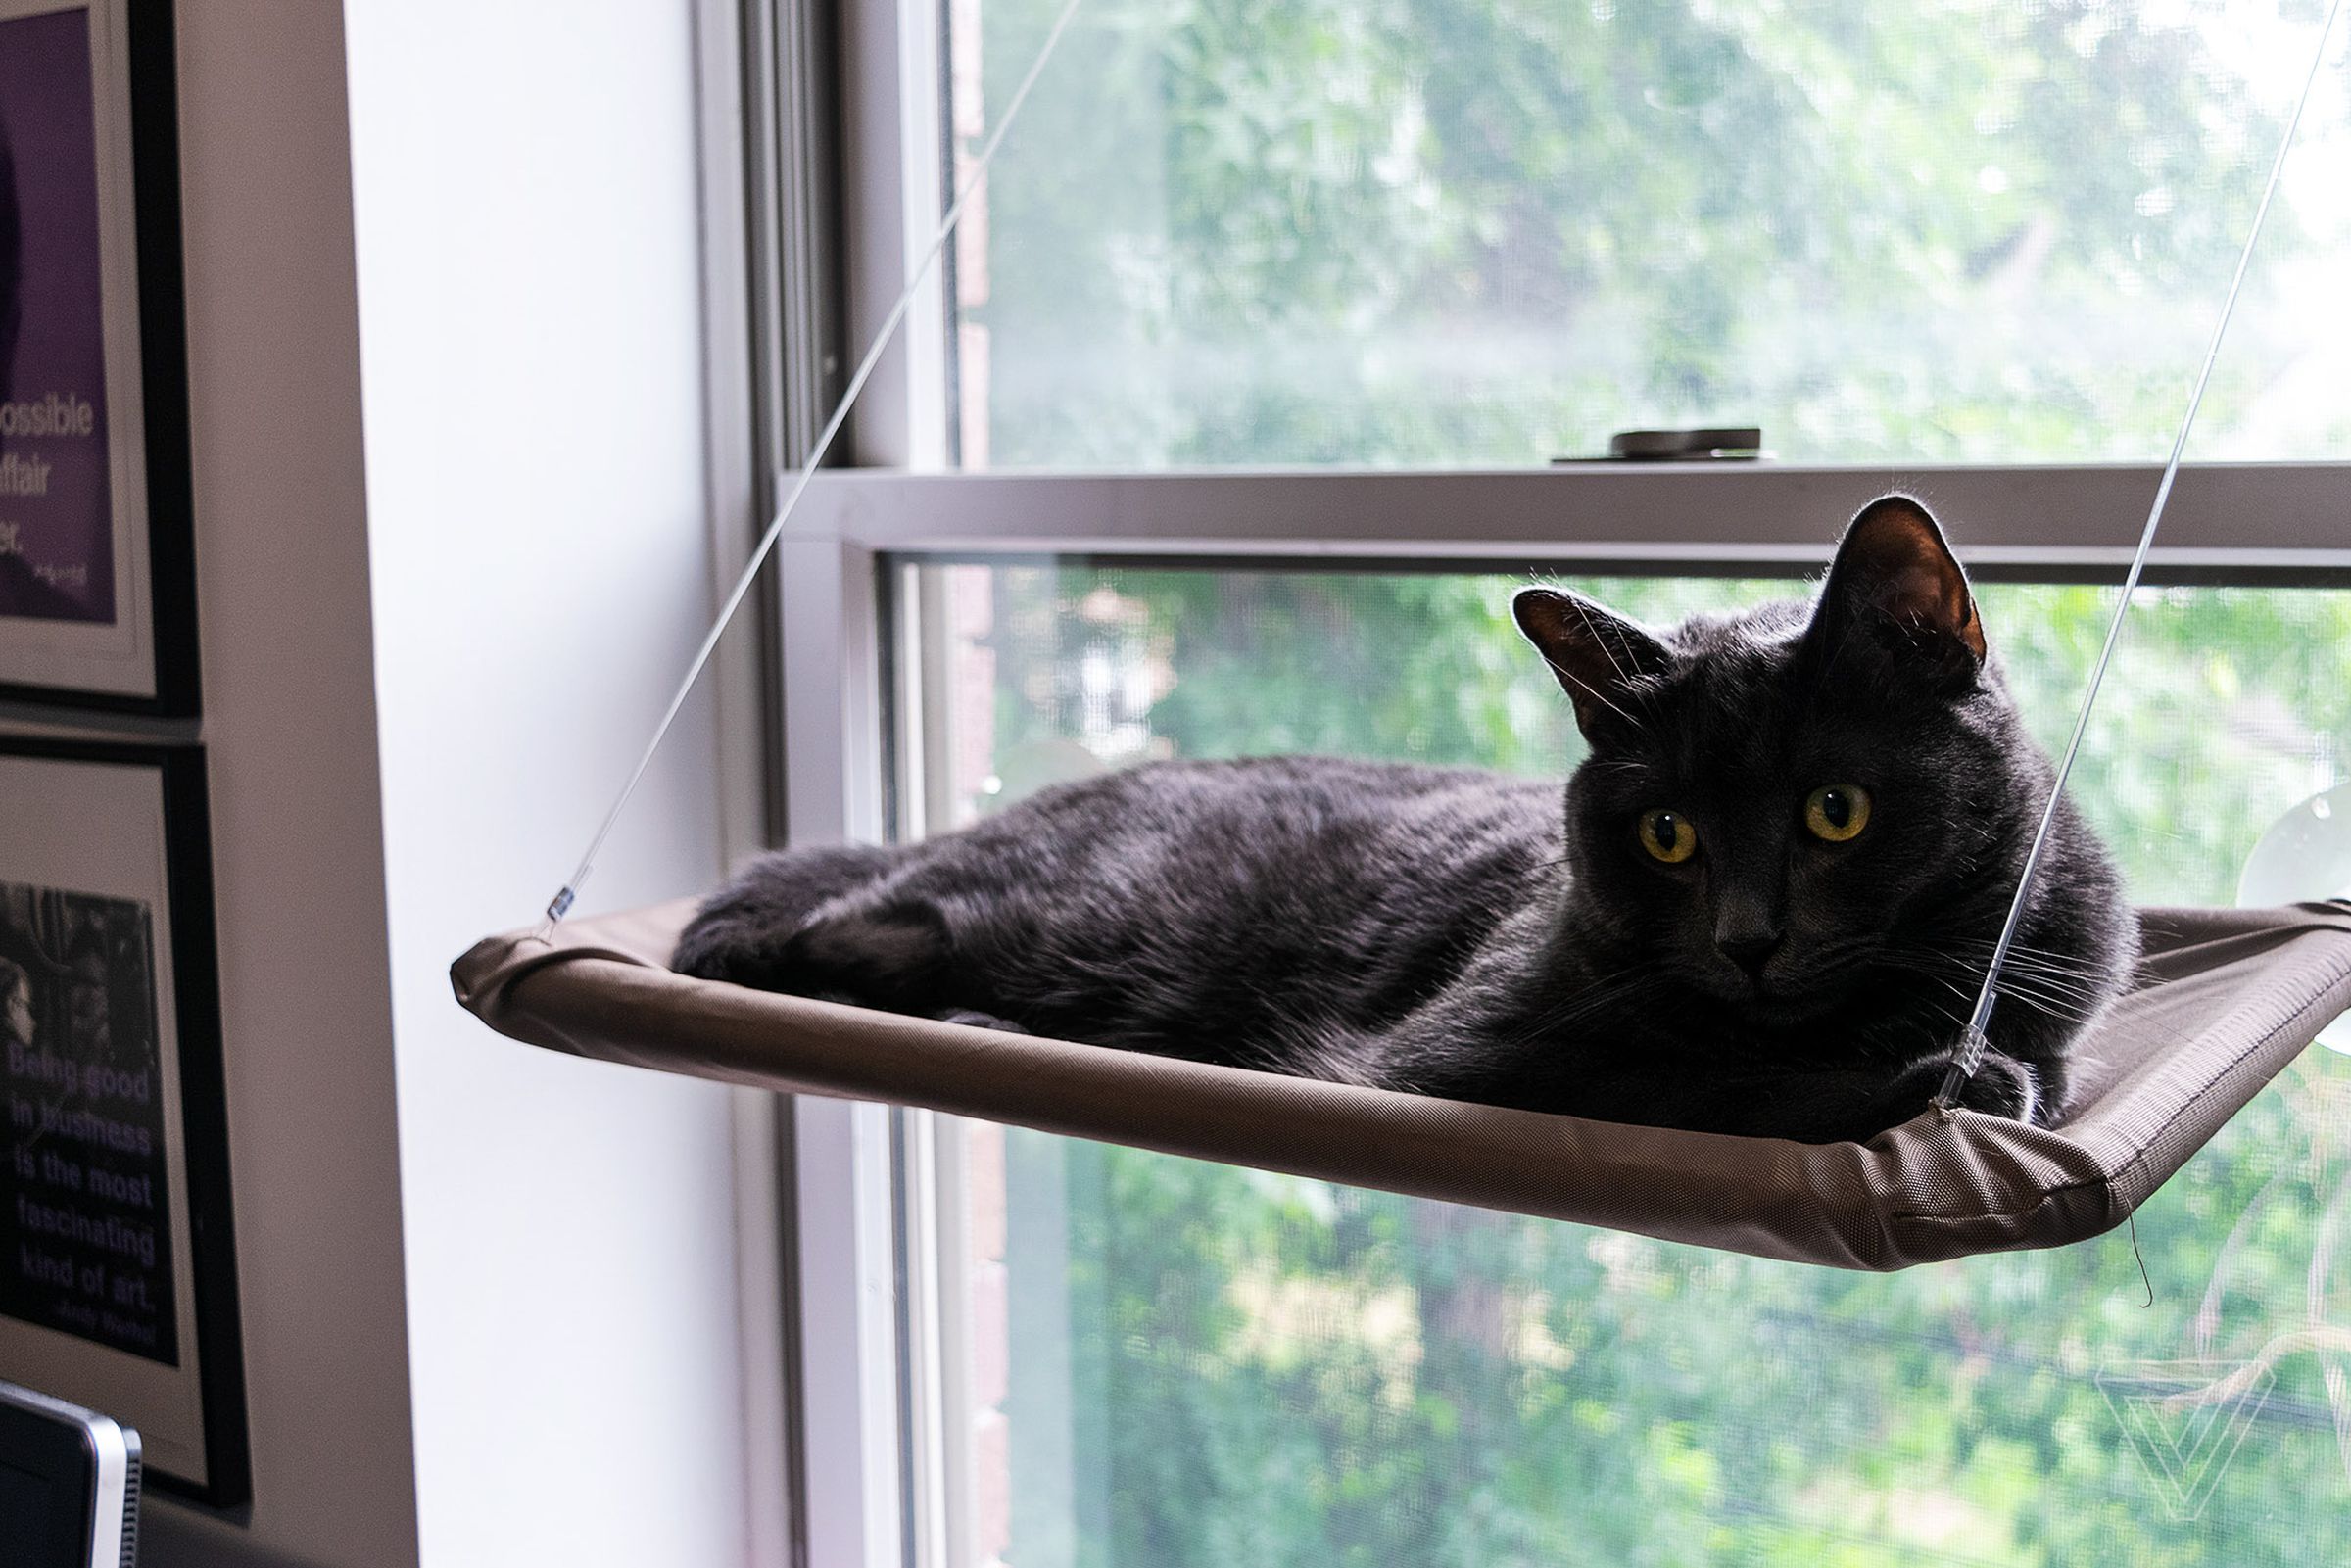 Black cat on leather shelf at window